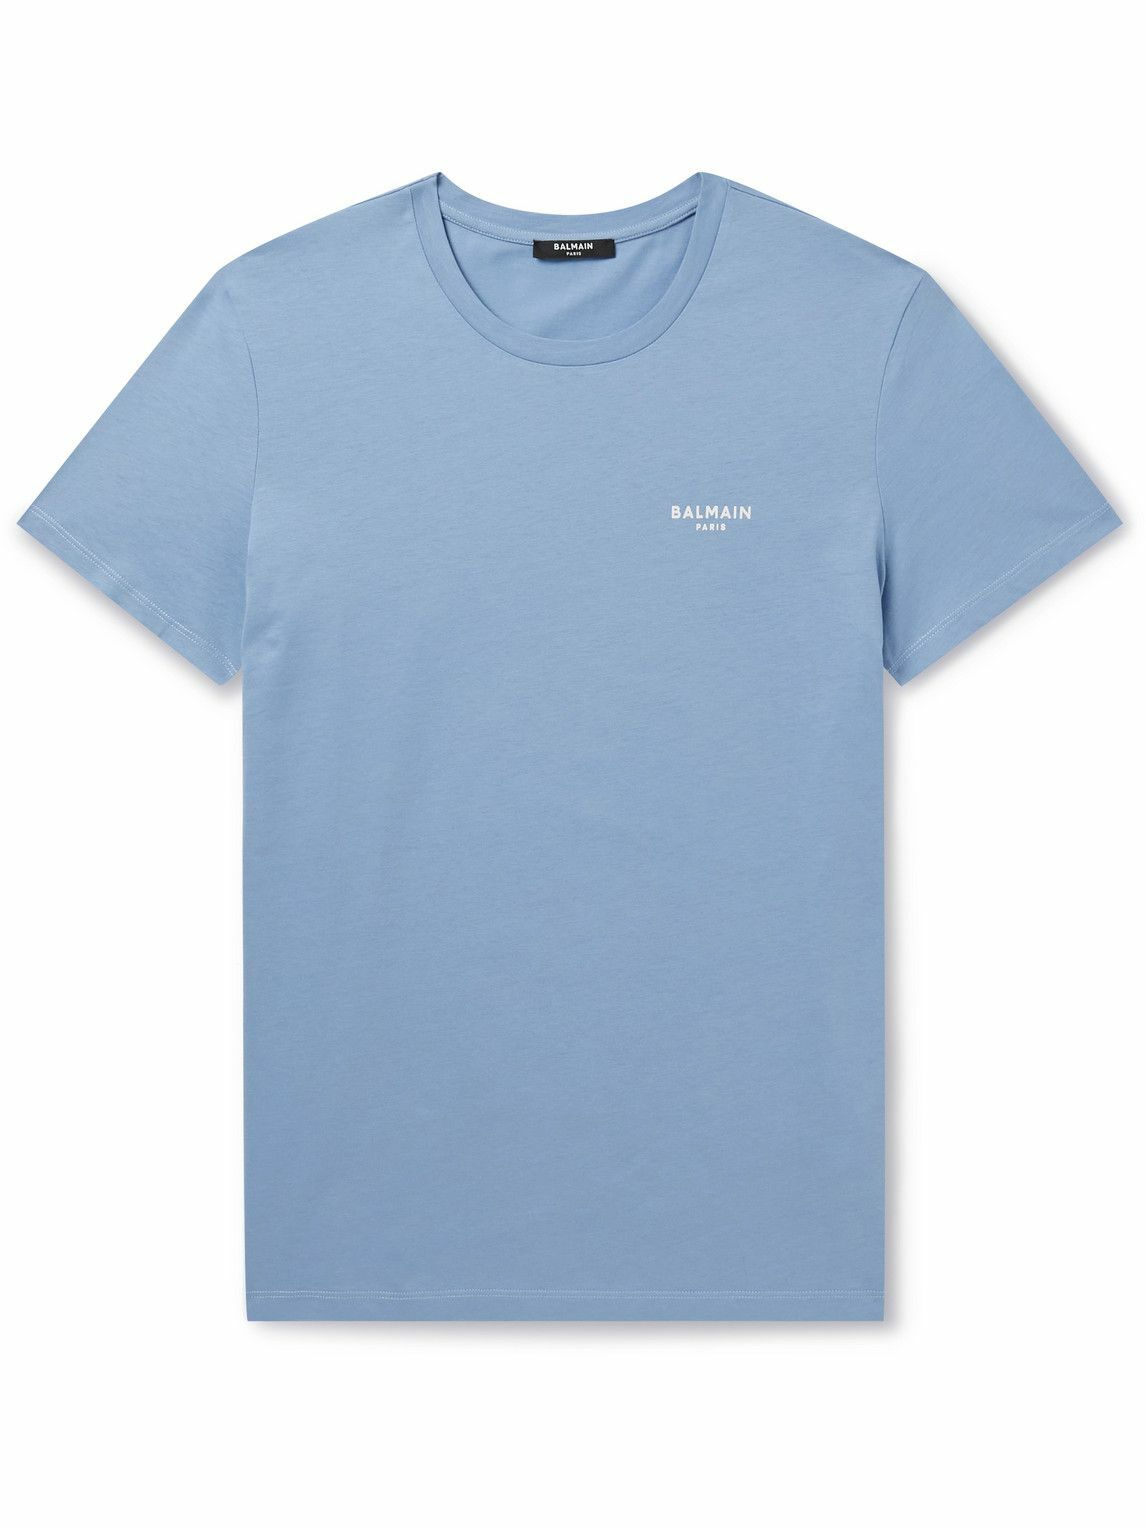 Balmain - Logo-Flocked Cotton-Jersey T-Shirt - Blue Balmain